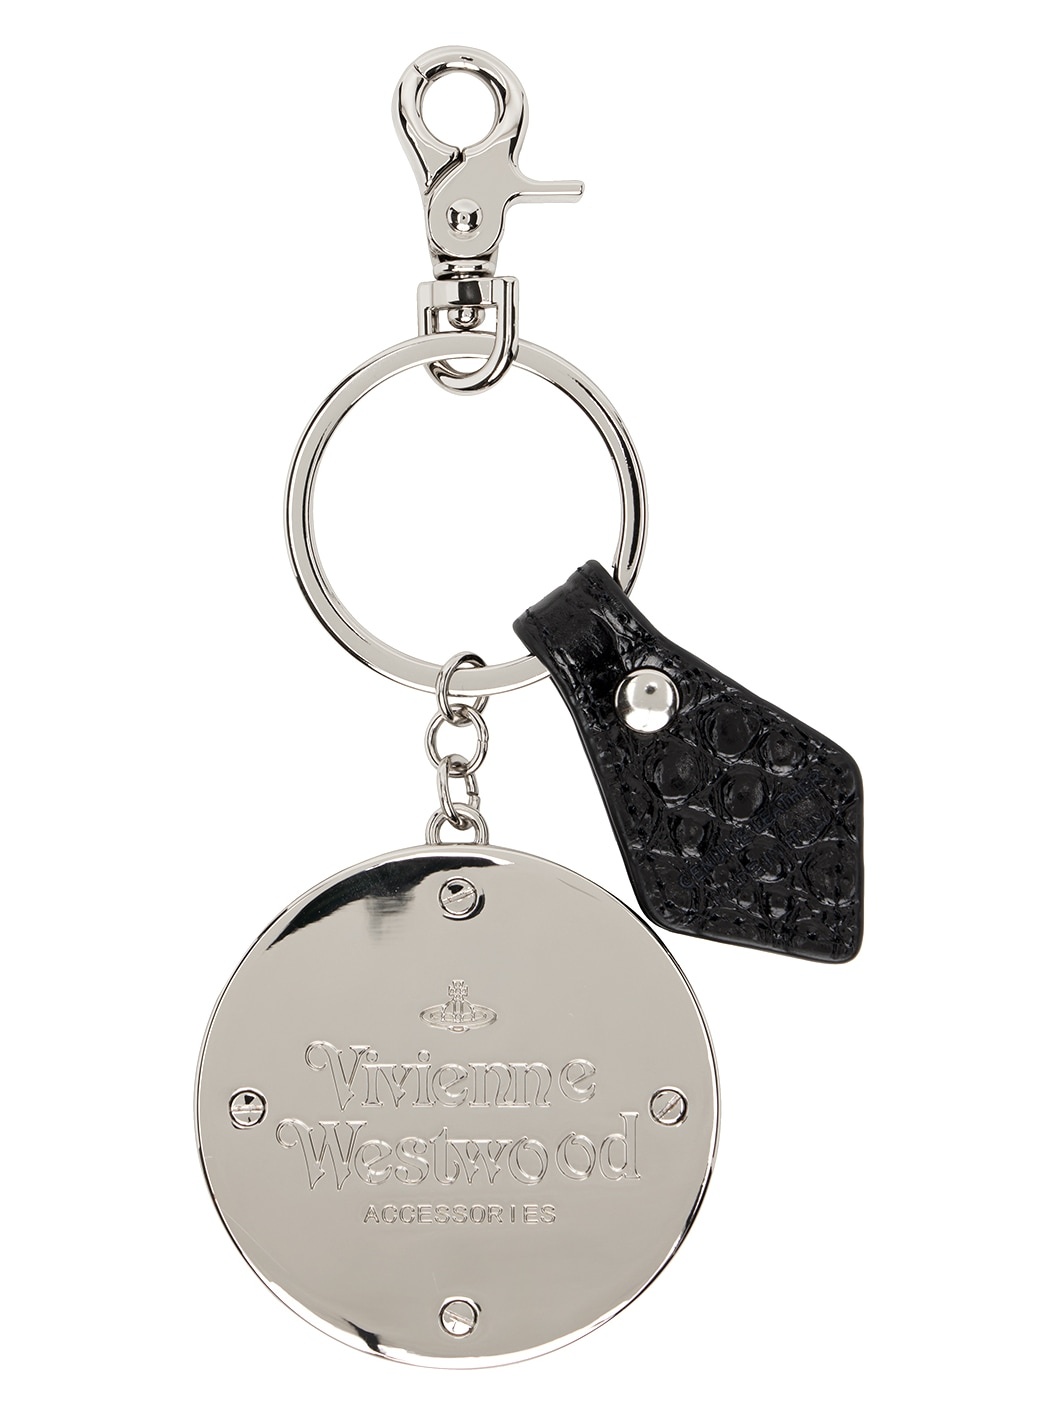 Black 'I Love Orb' Keychain by Vivienne Westwood on Sale